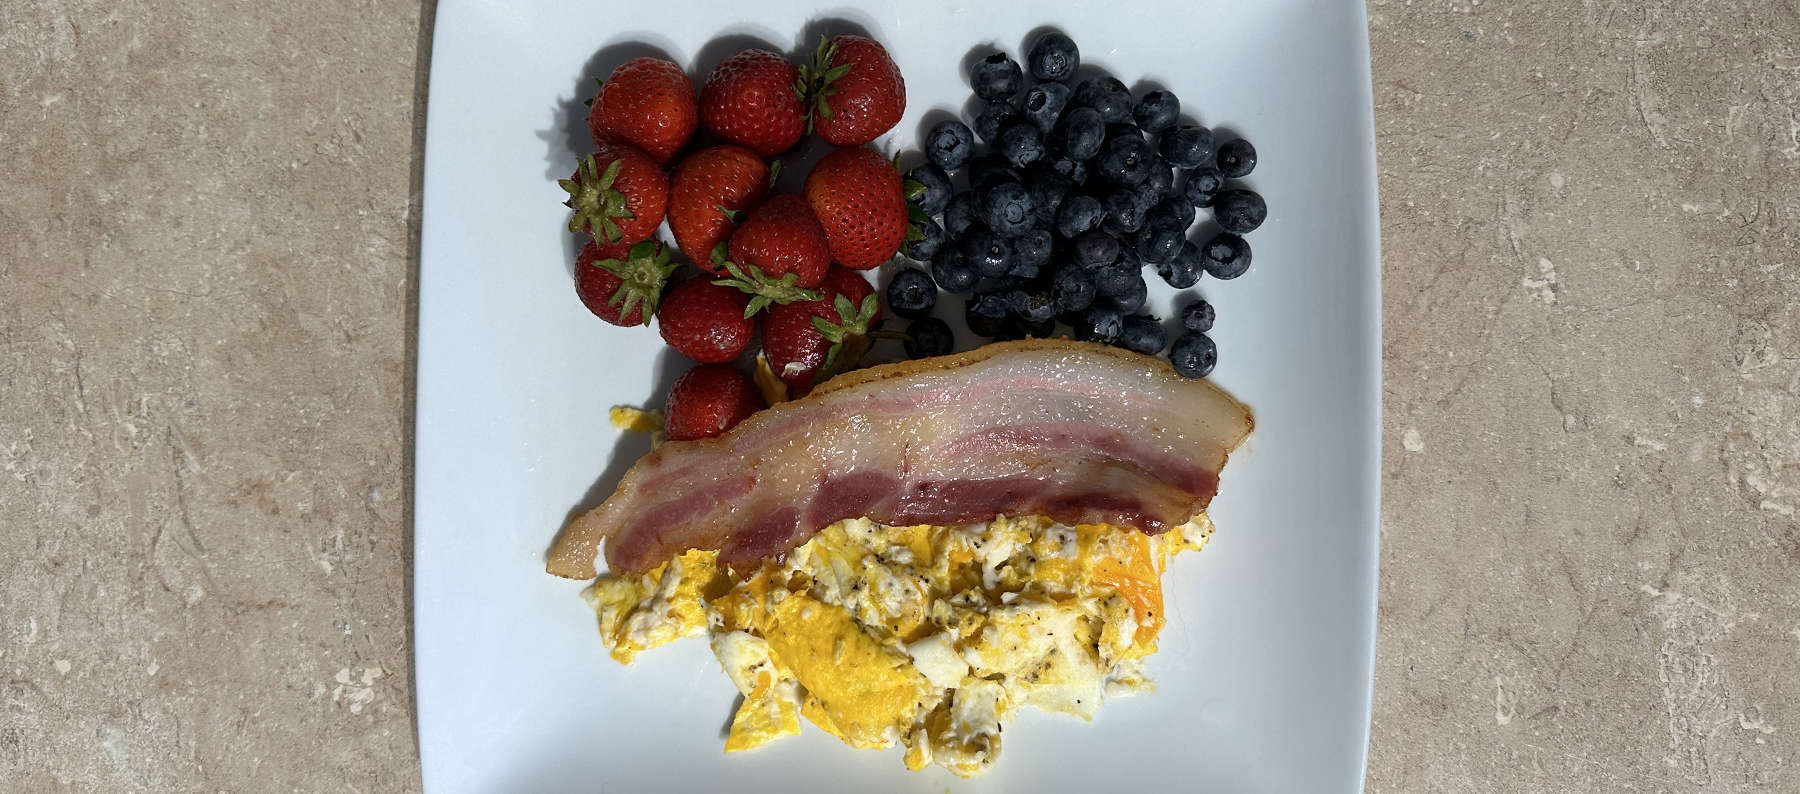 Breakfast for Success! Eggs, Bacon, Strawberries & Blueberries!